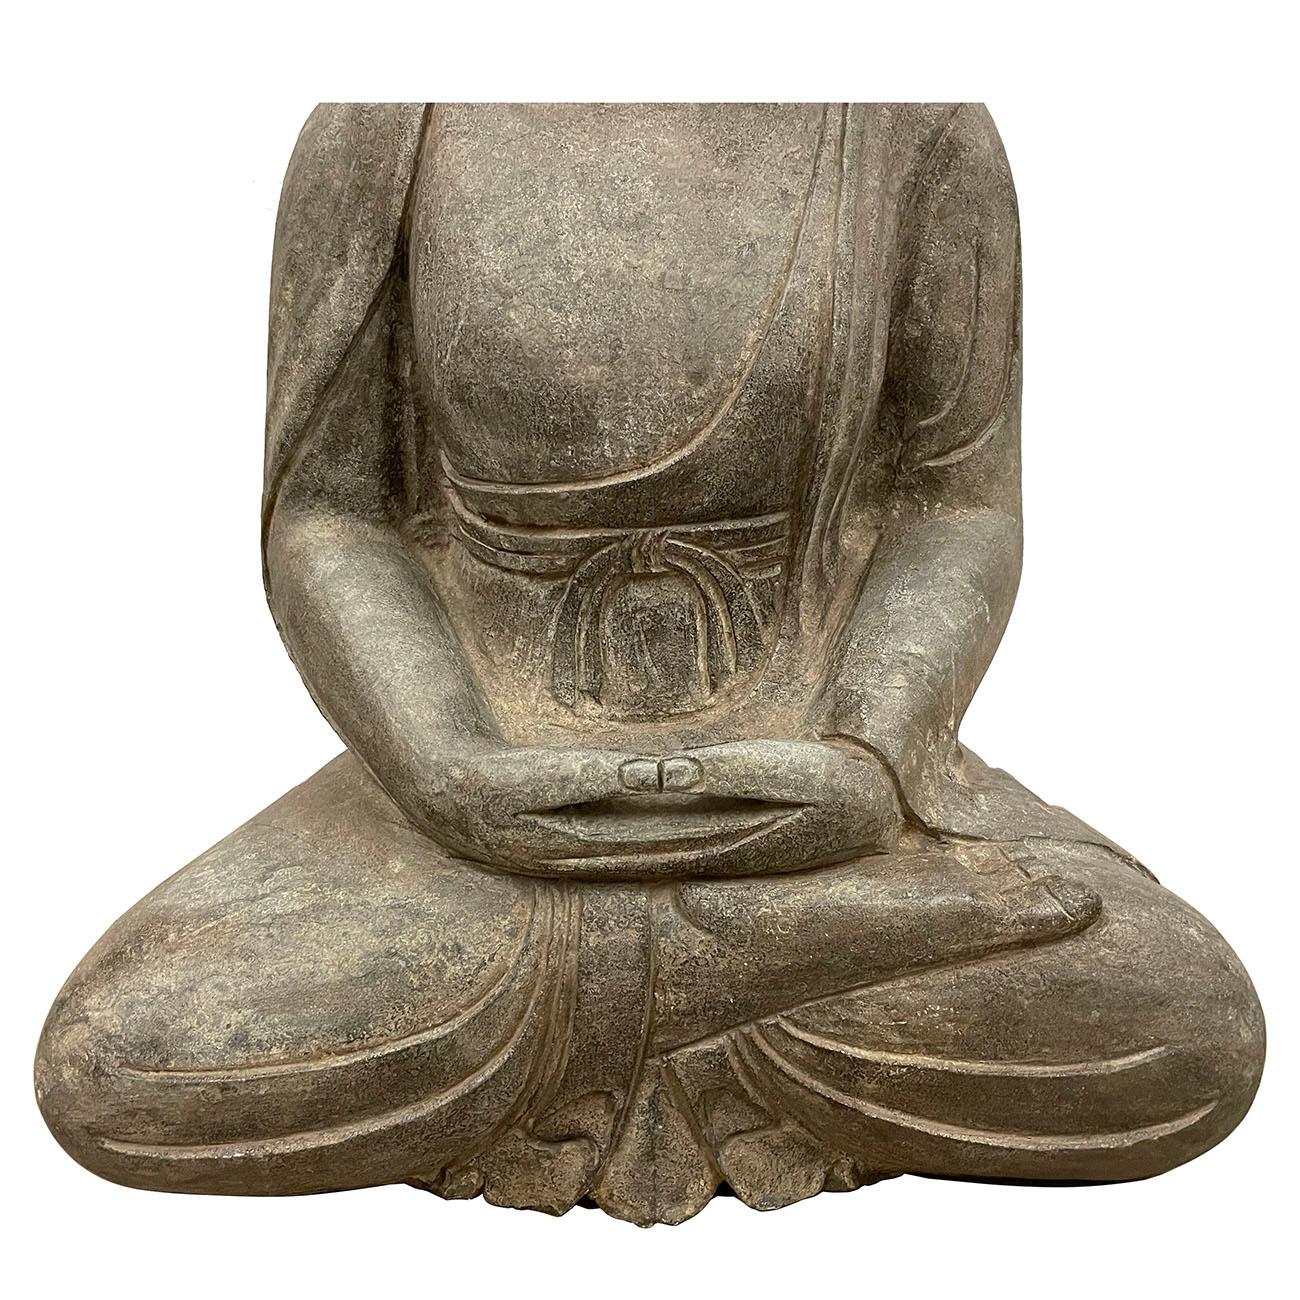 Chinese Export 20th Century Chinese Carved Stone Meditation Amitabha Sakyamuni Buddha Statuary